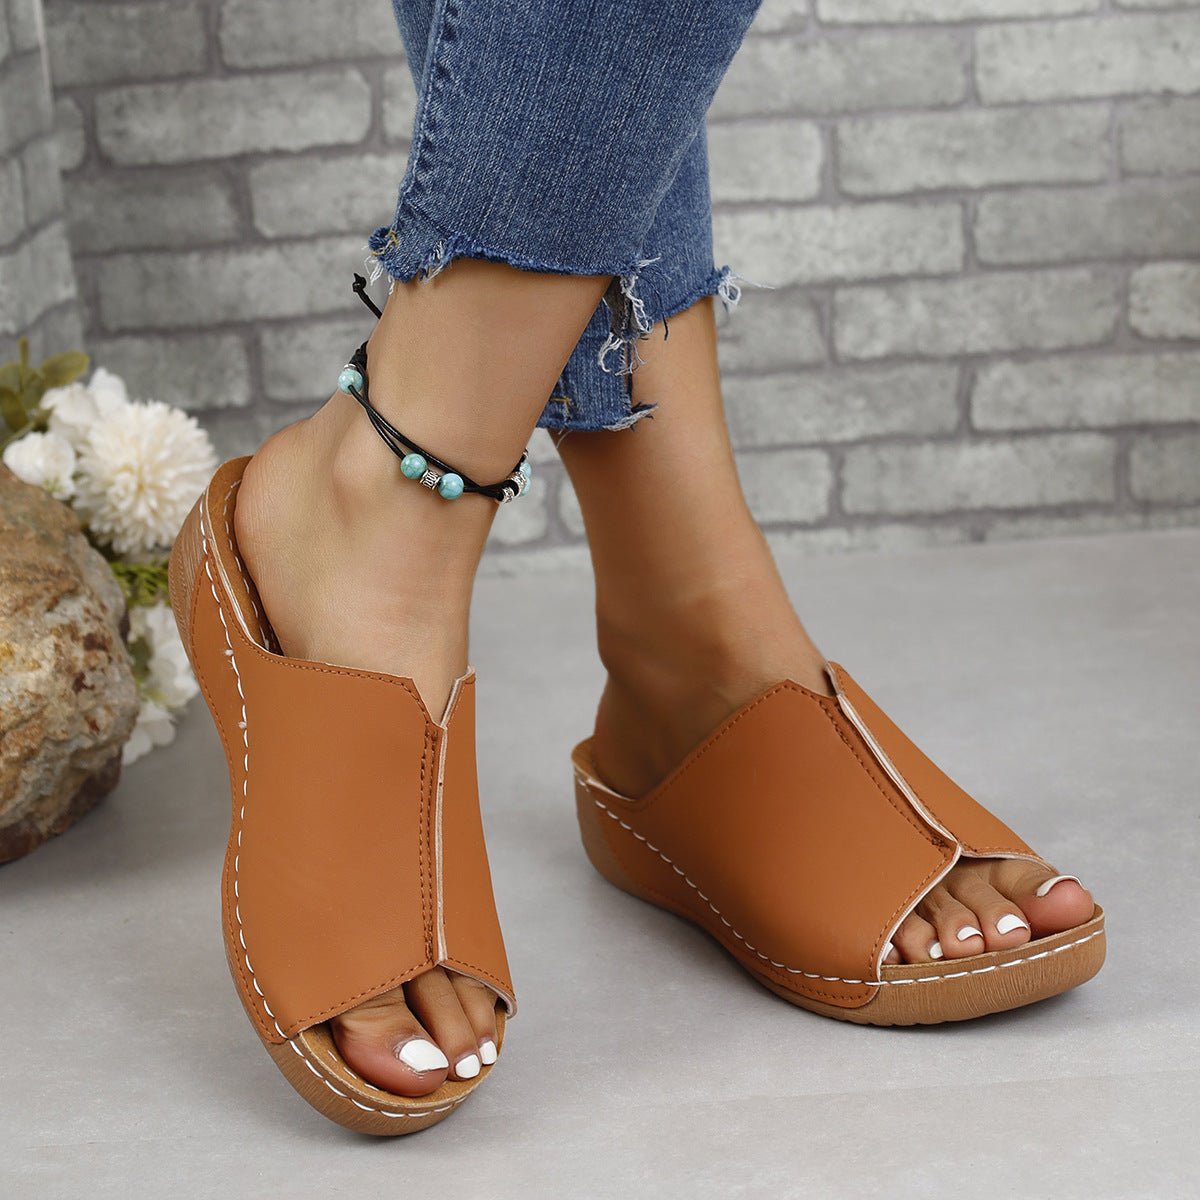 PU Leather Open Toe Sandals - OMG! Rose